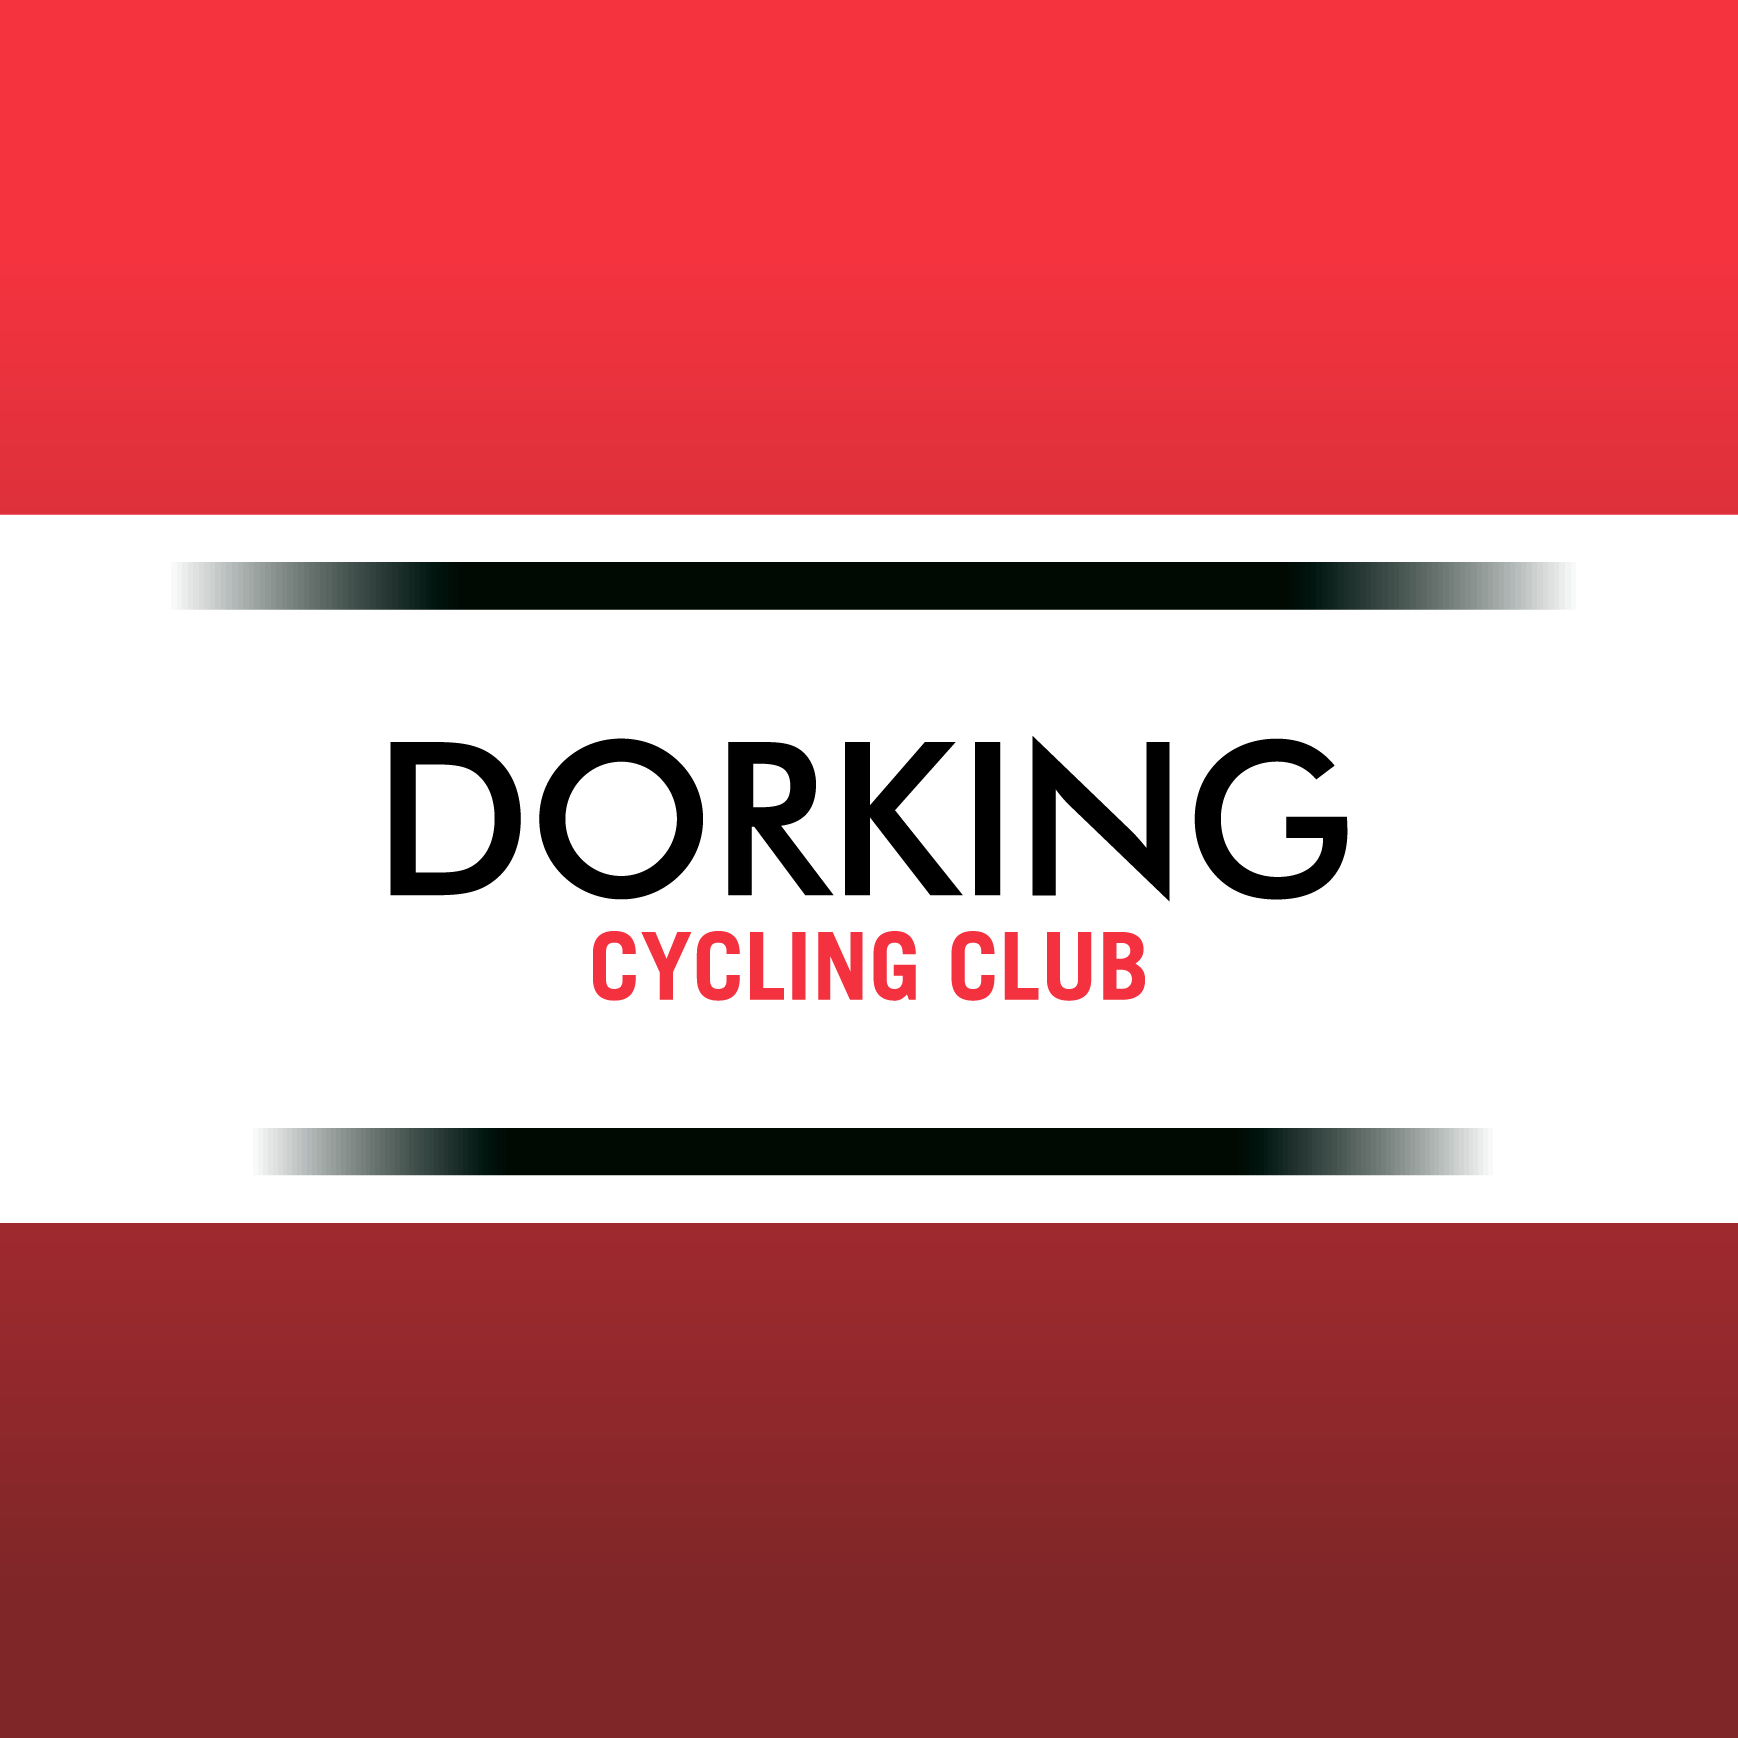 Club Image for DORKING CYCLING CLUB